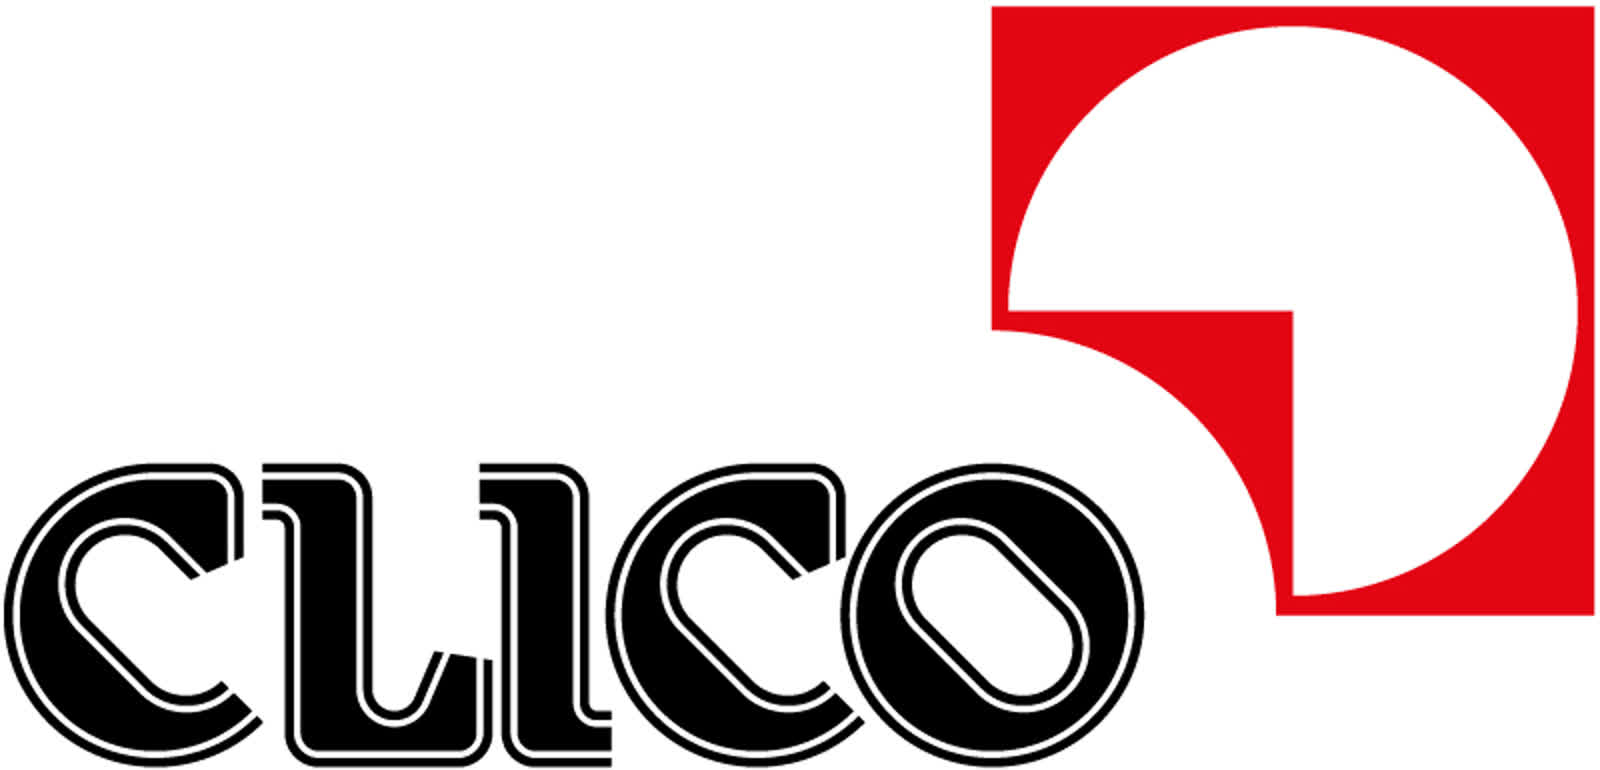 clico-logo-2019.jpg